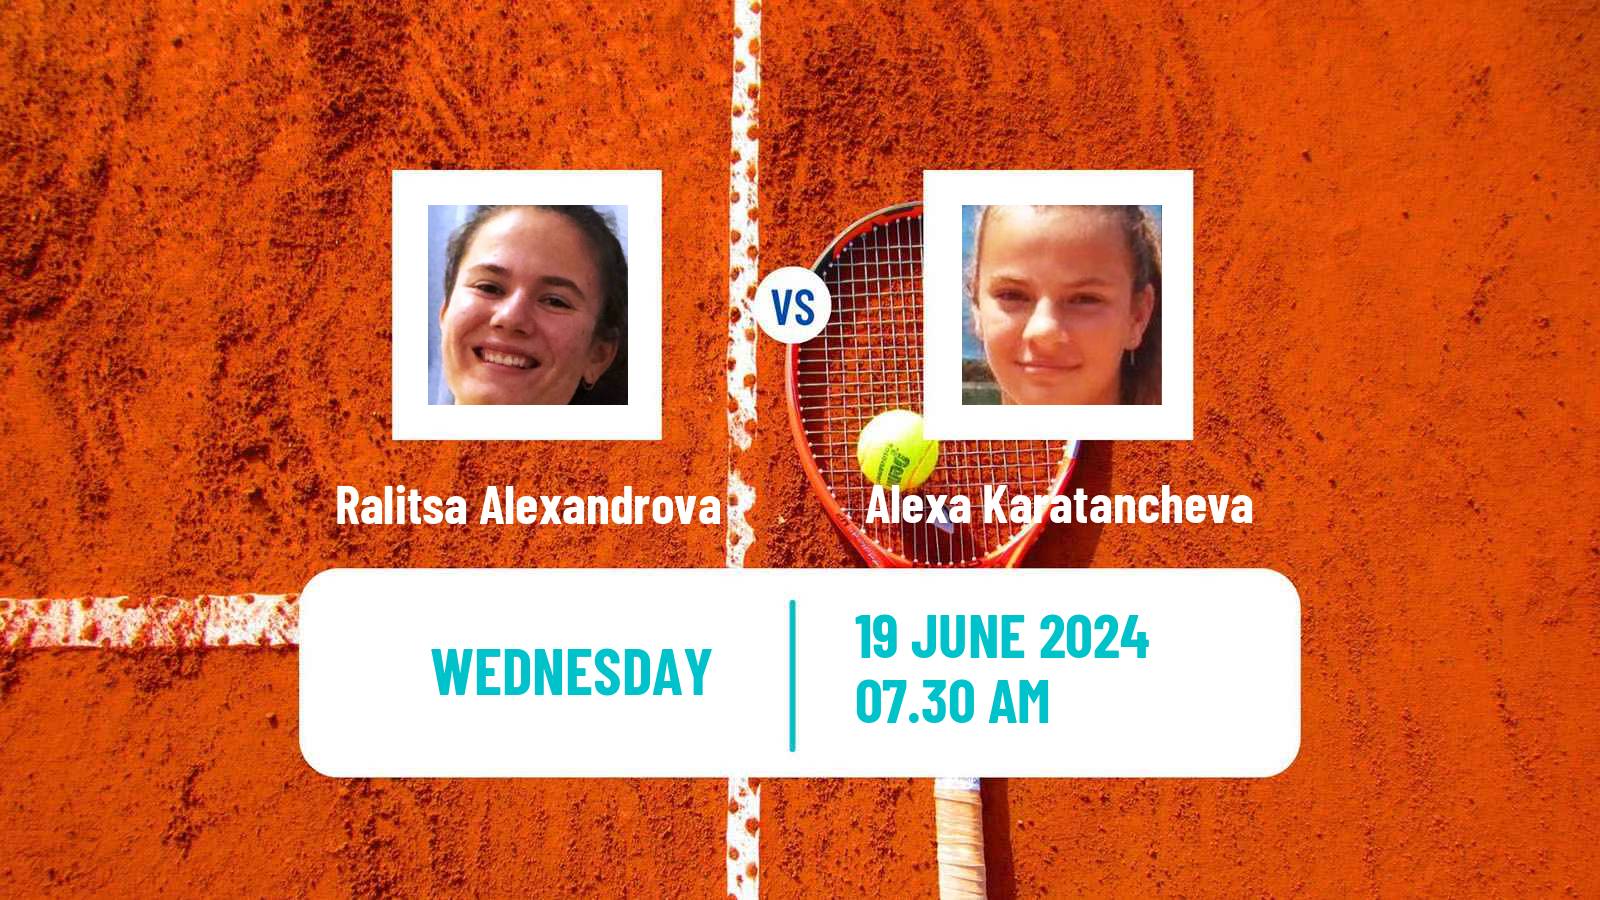 Tennis ITF W15 Kursumlijska Banja 8 Women Ralitsa Alexandrova - Alexa Karatancheva